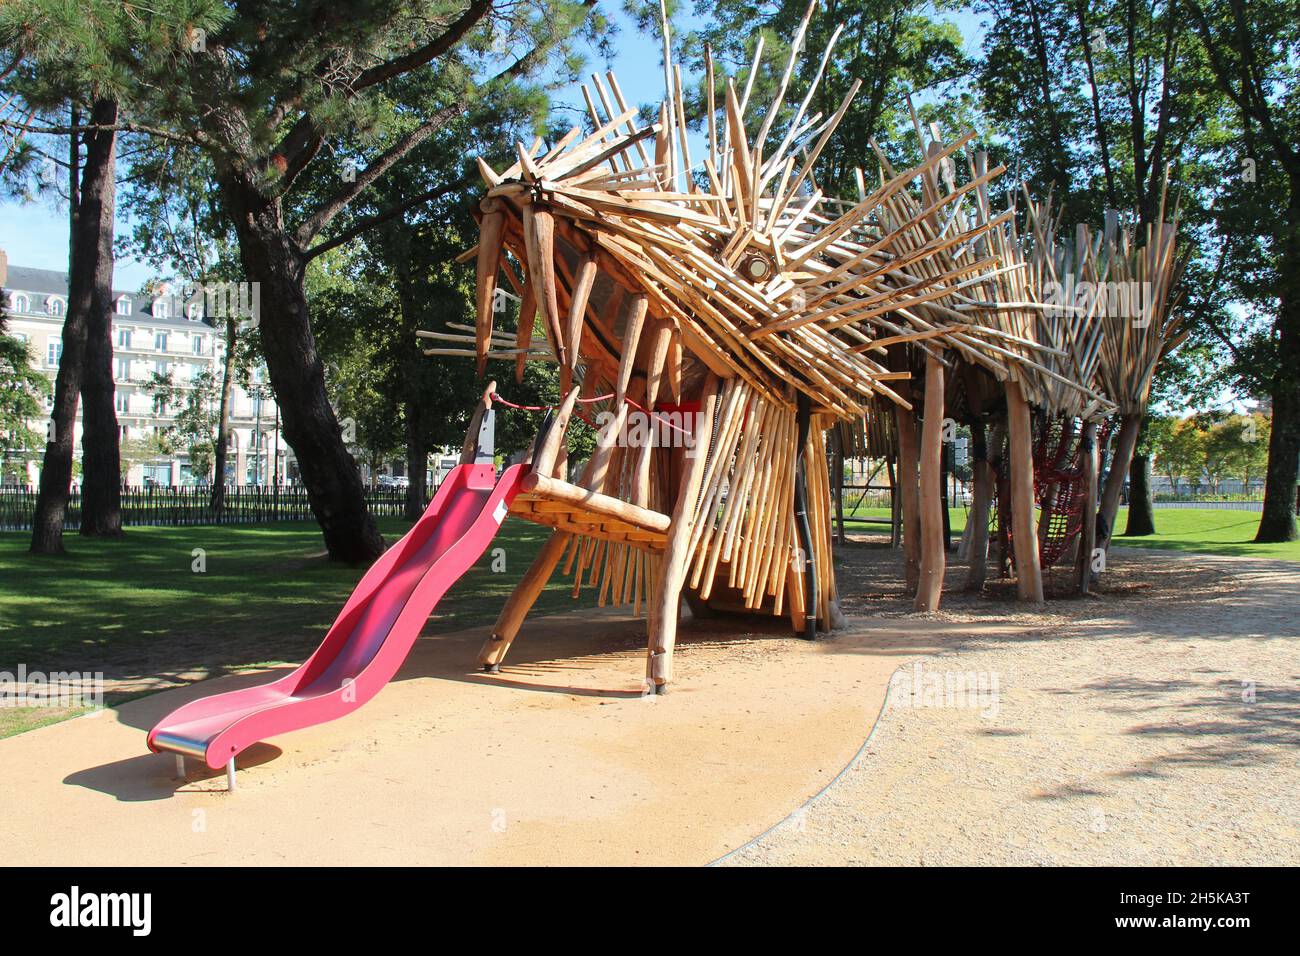 wood dragon - Playground